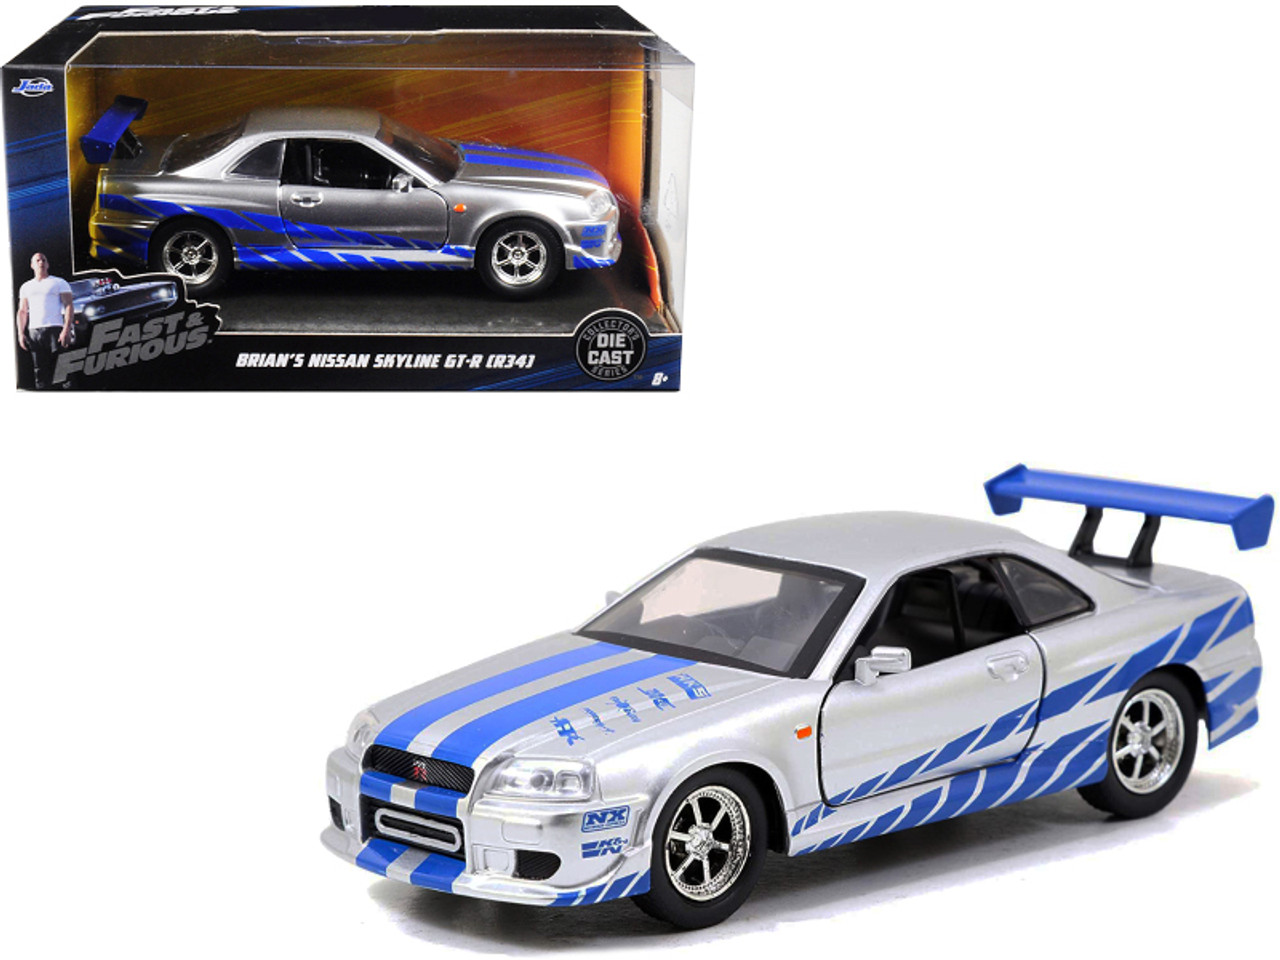 Brian's Nissan Skyline GT-R (R34) Silver with Blue Stripes "Fast & Furious" Movie 1/32 Diecast Model Car by Jada